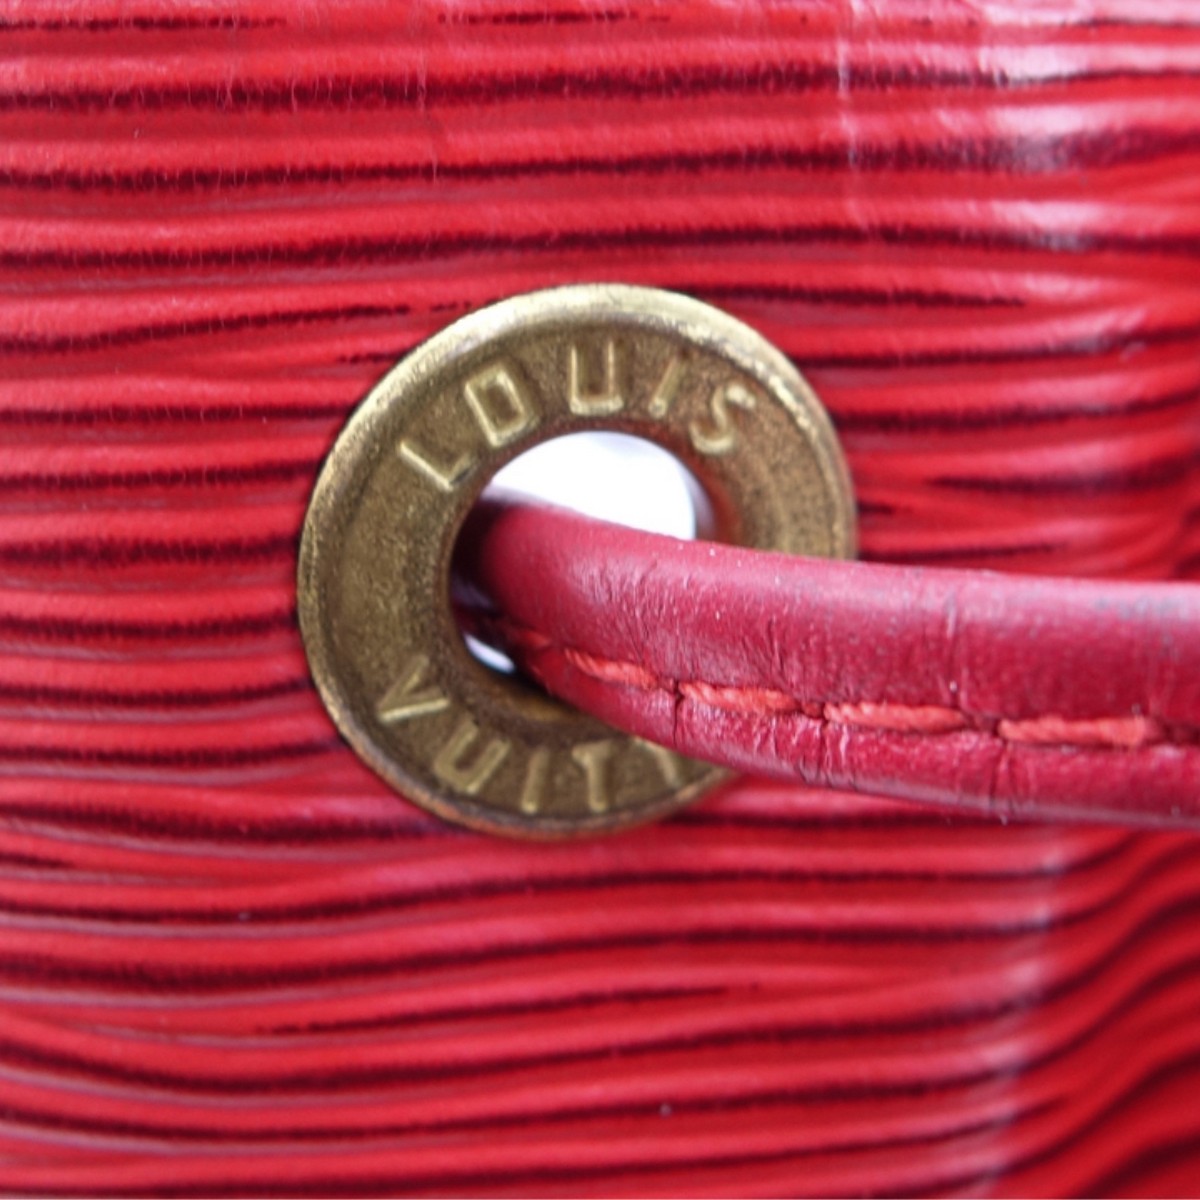 Louis Vuitton Red Epi Leather Noe PM Bag